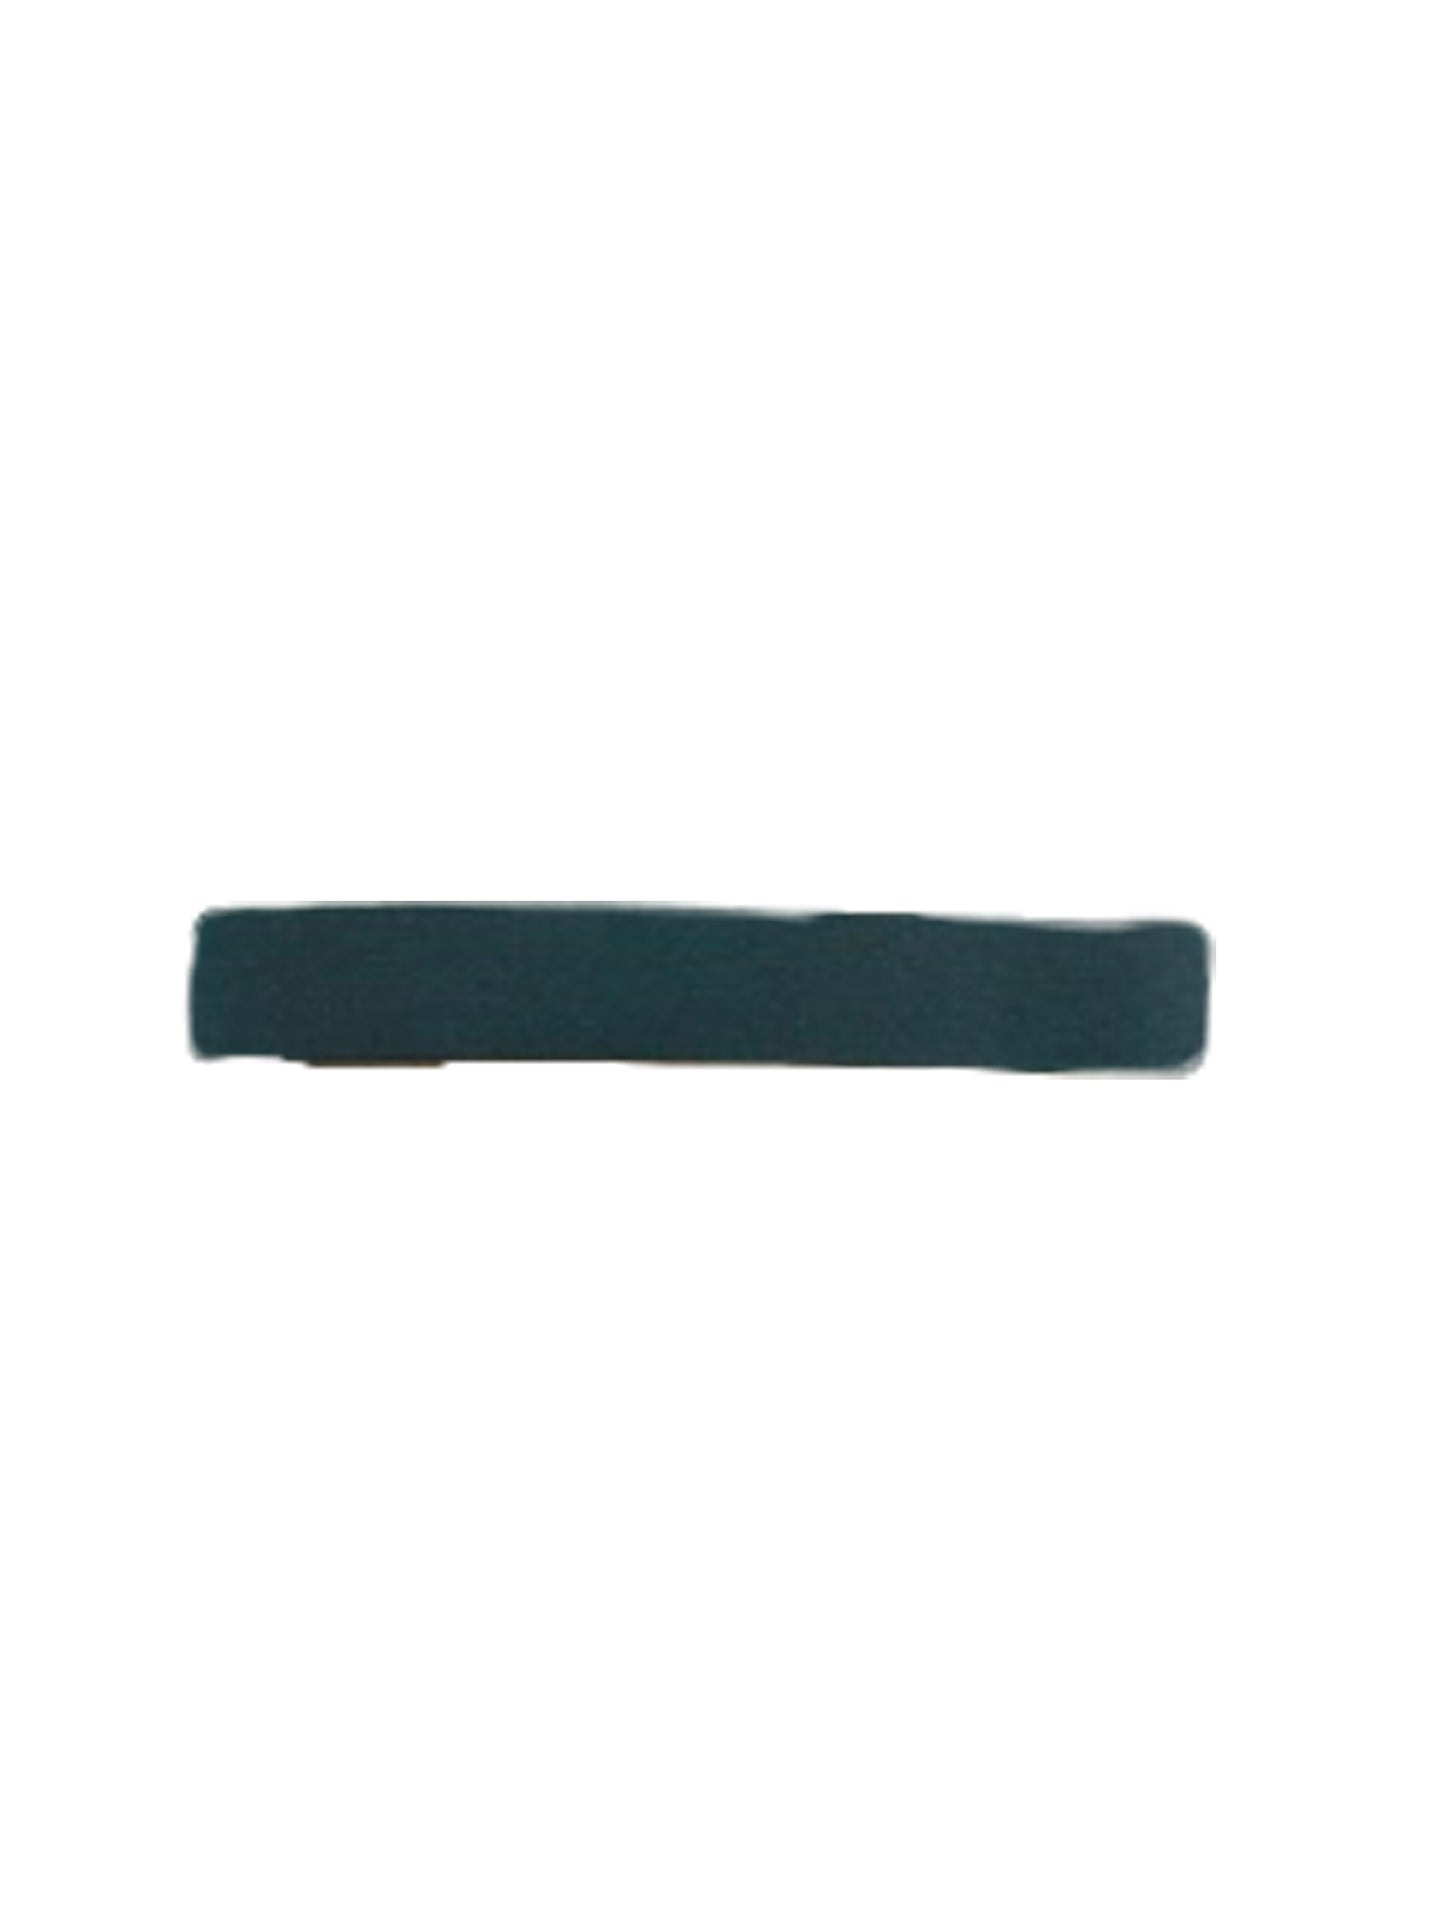 elastic hat band 1.5 inch army green